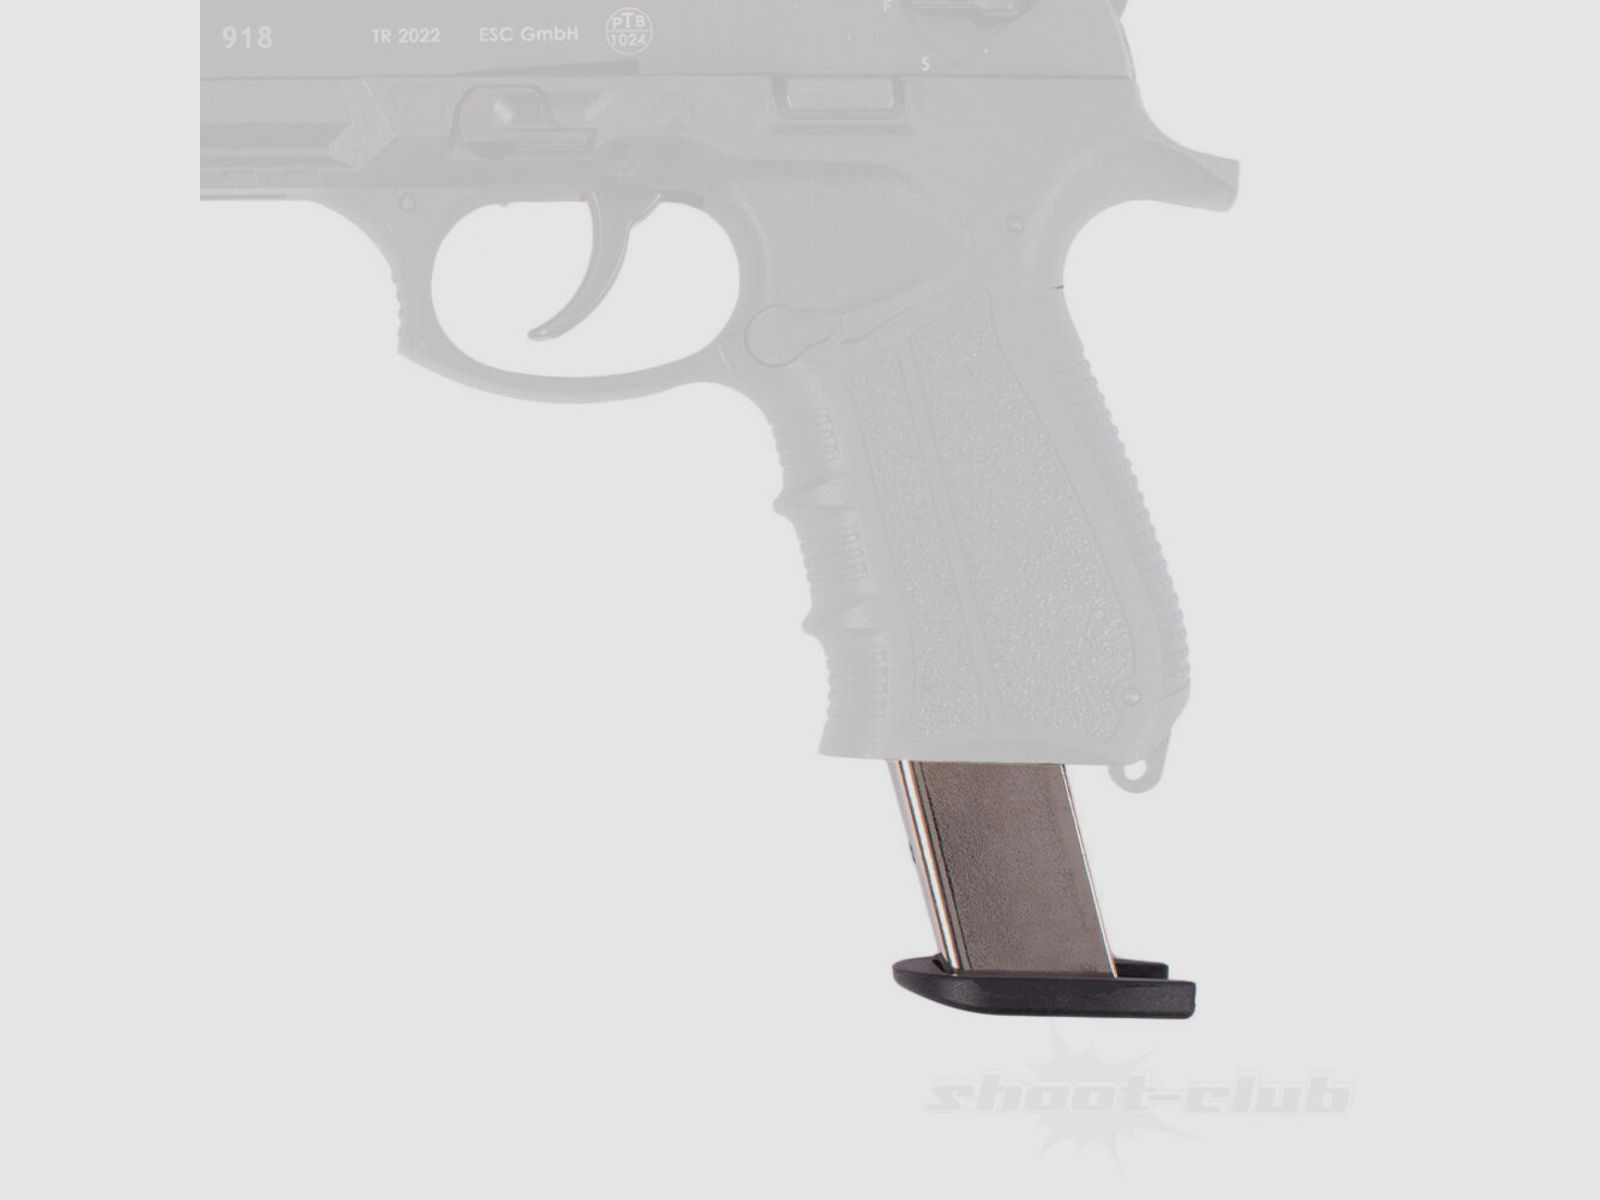 Zoraki 918 Magazin 18 Schuss Chrom Schreckschuss-Pistole - 9mm P.A.K.